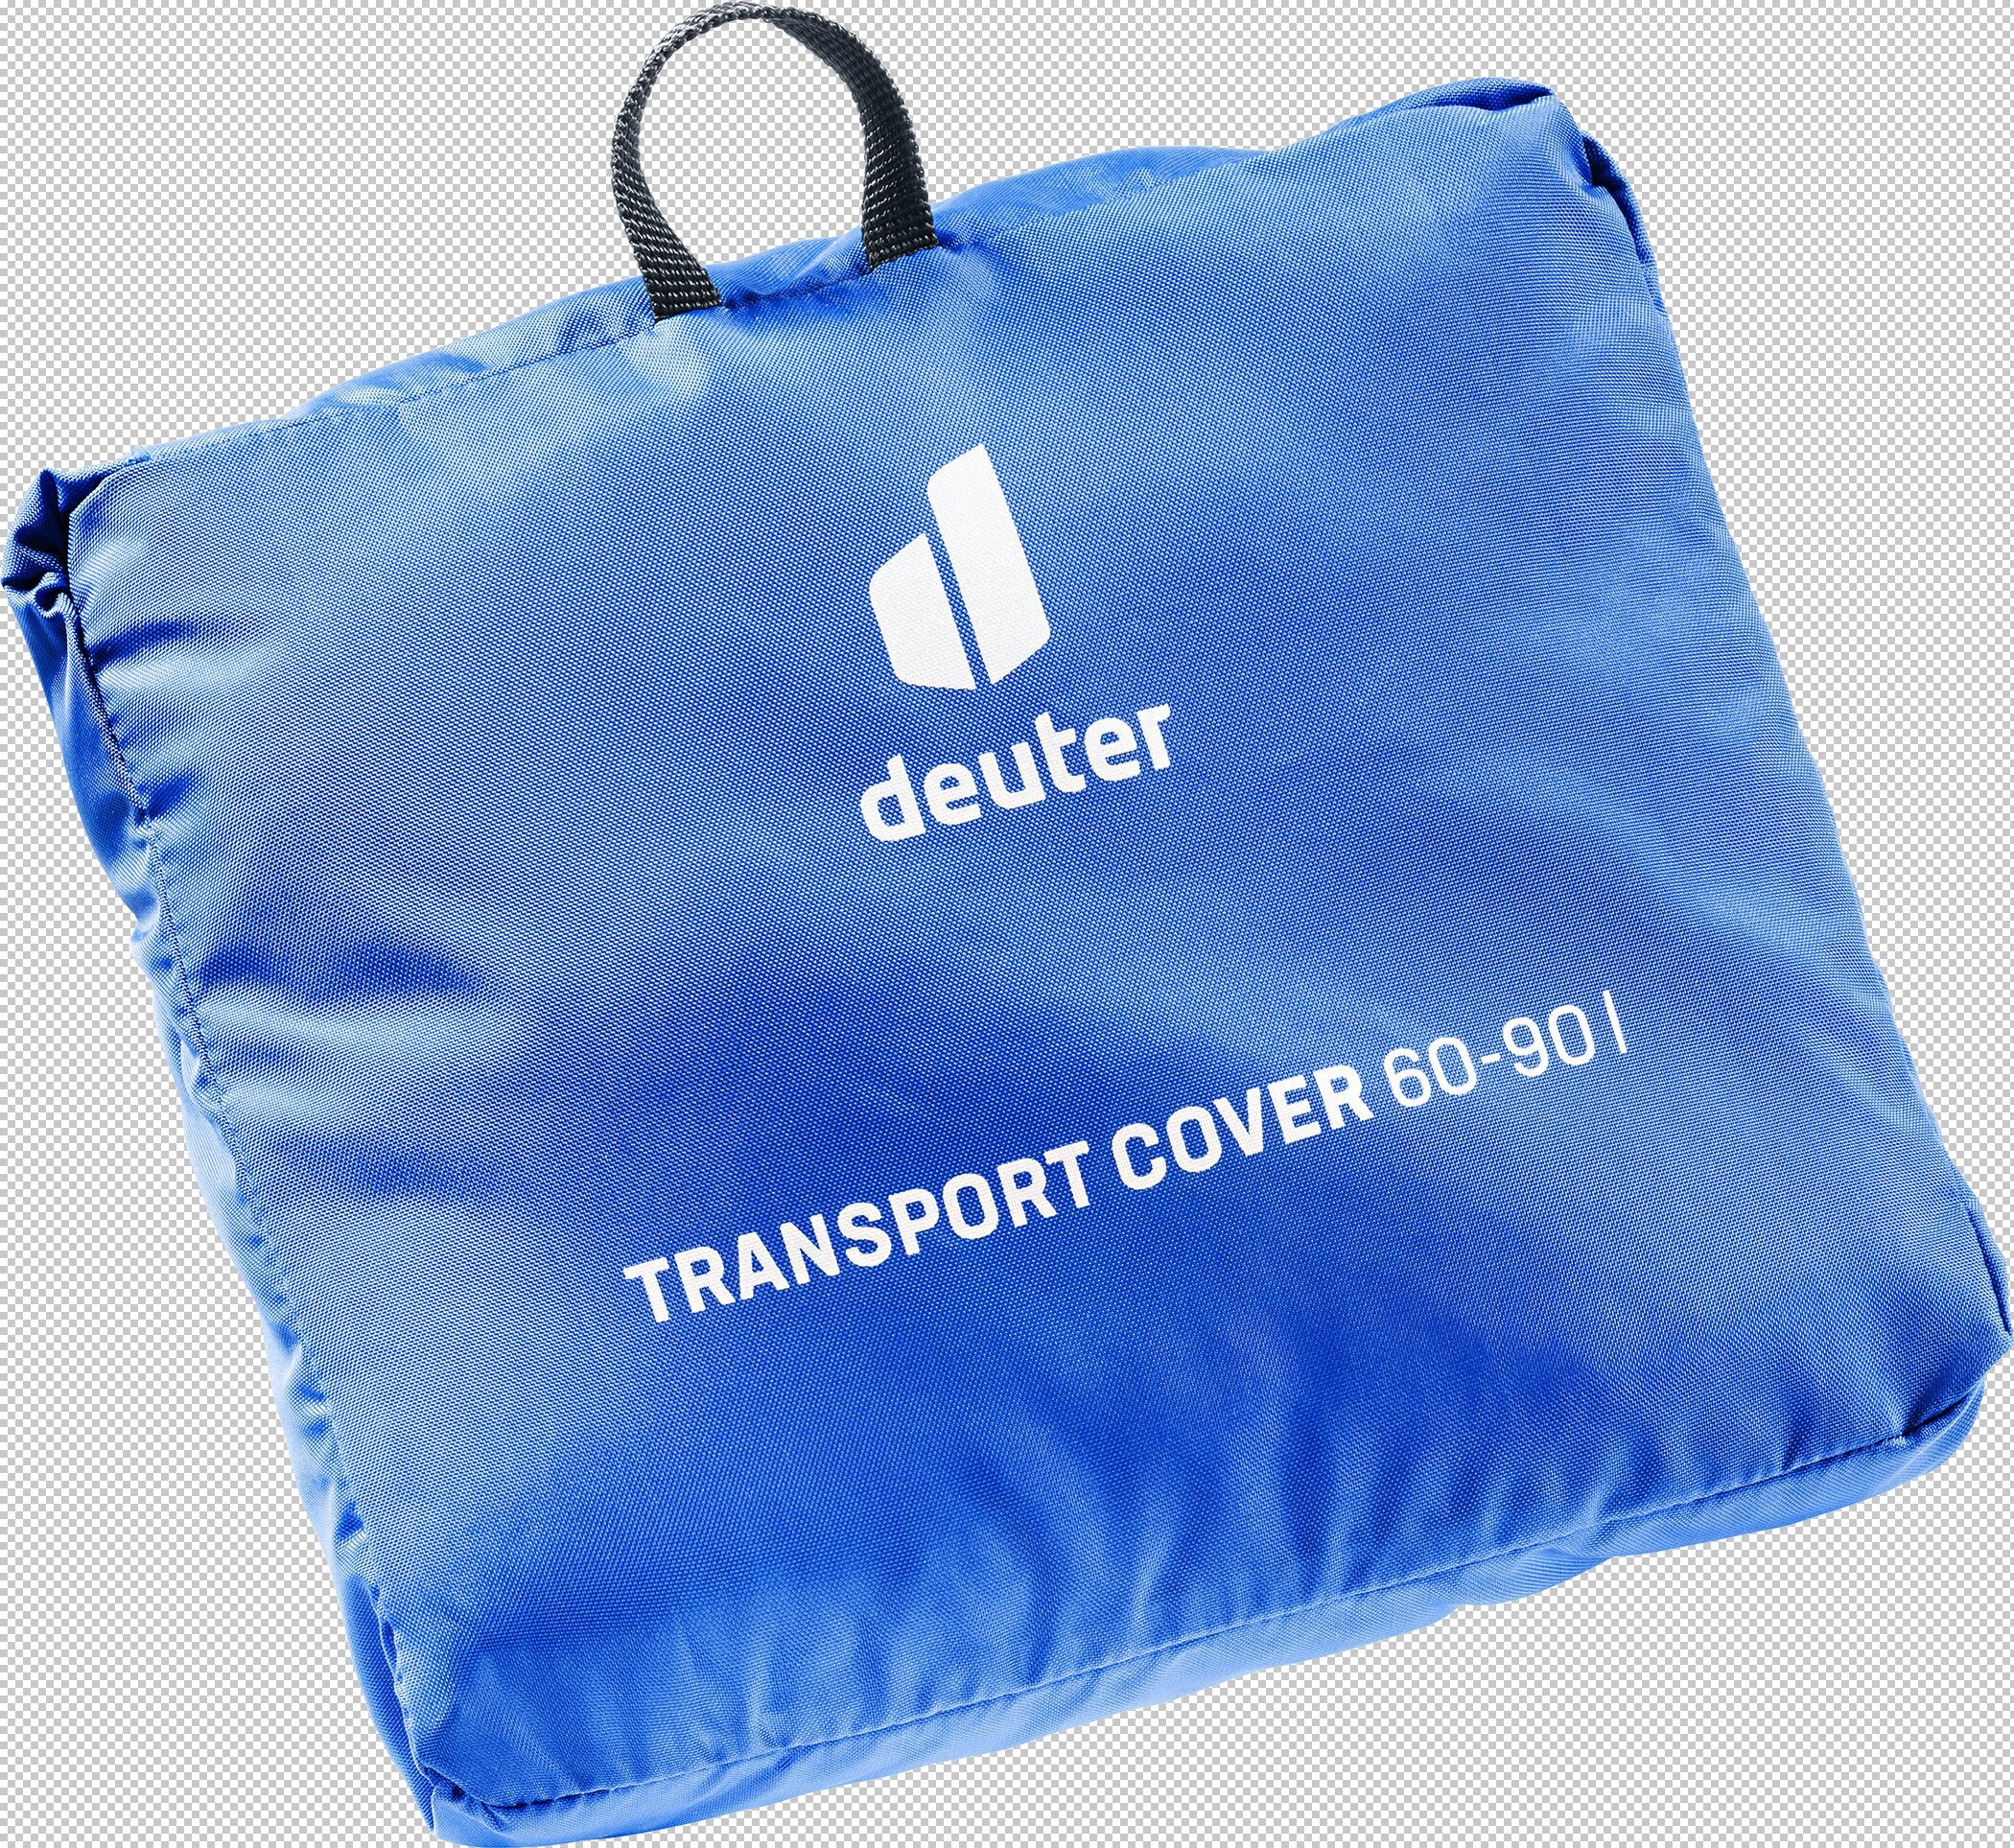 Hülle Transport Cover